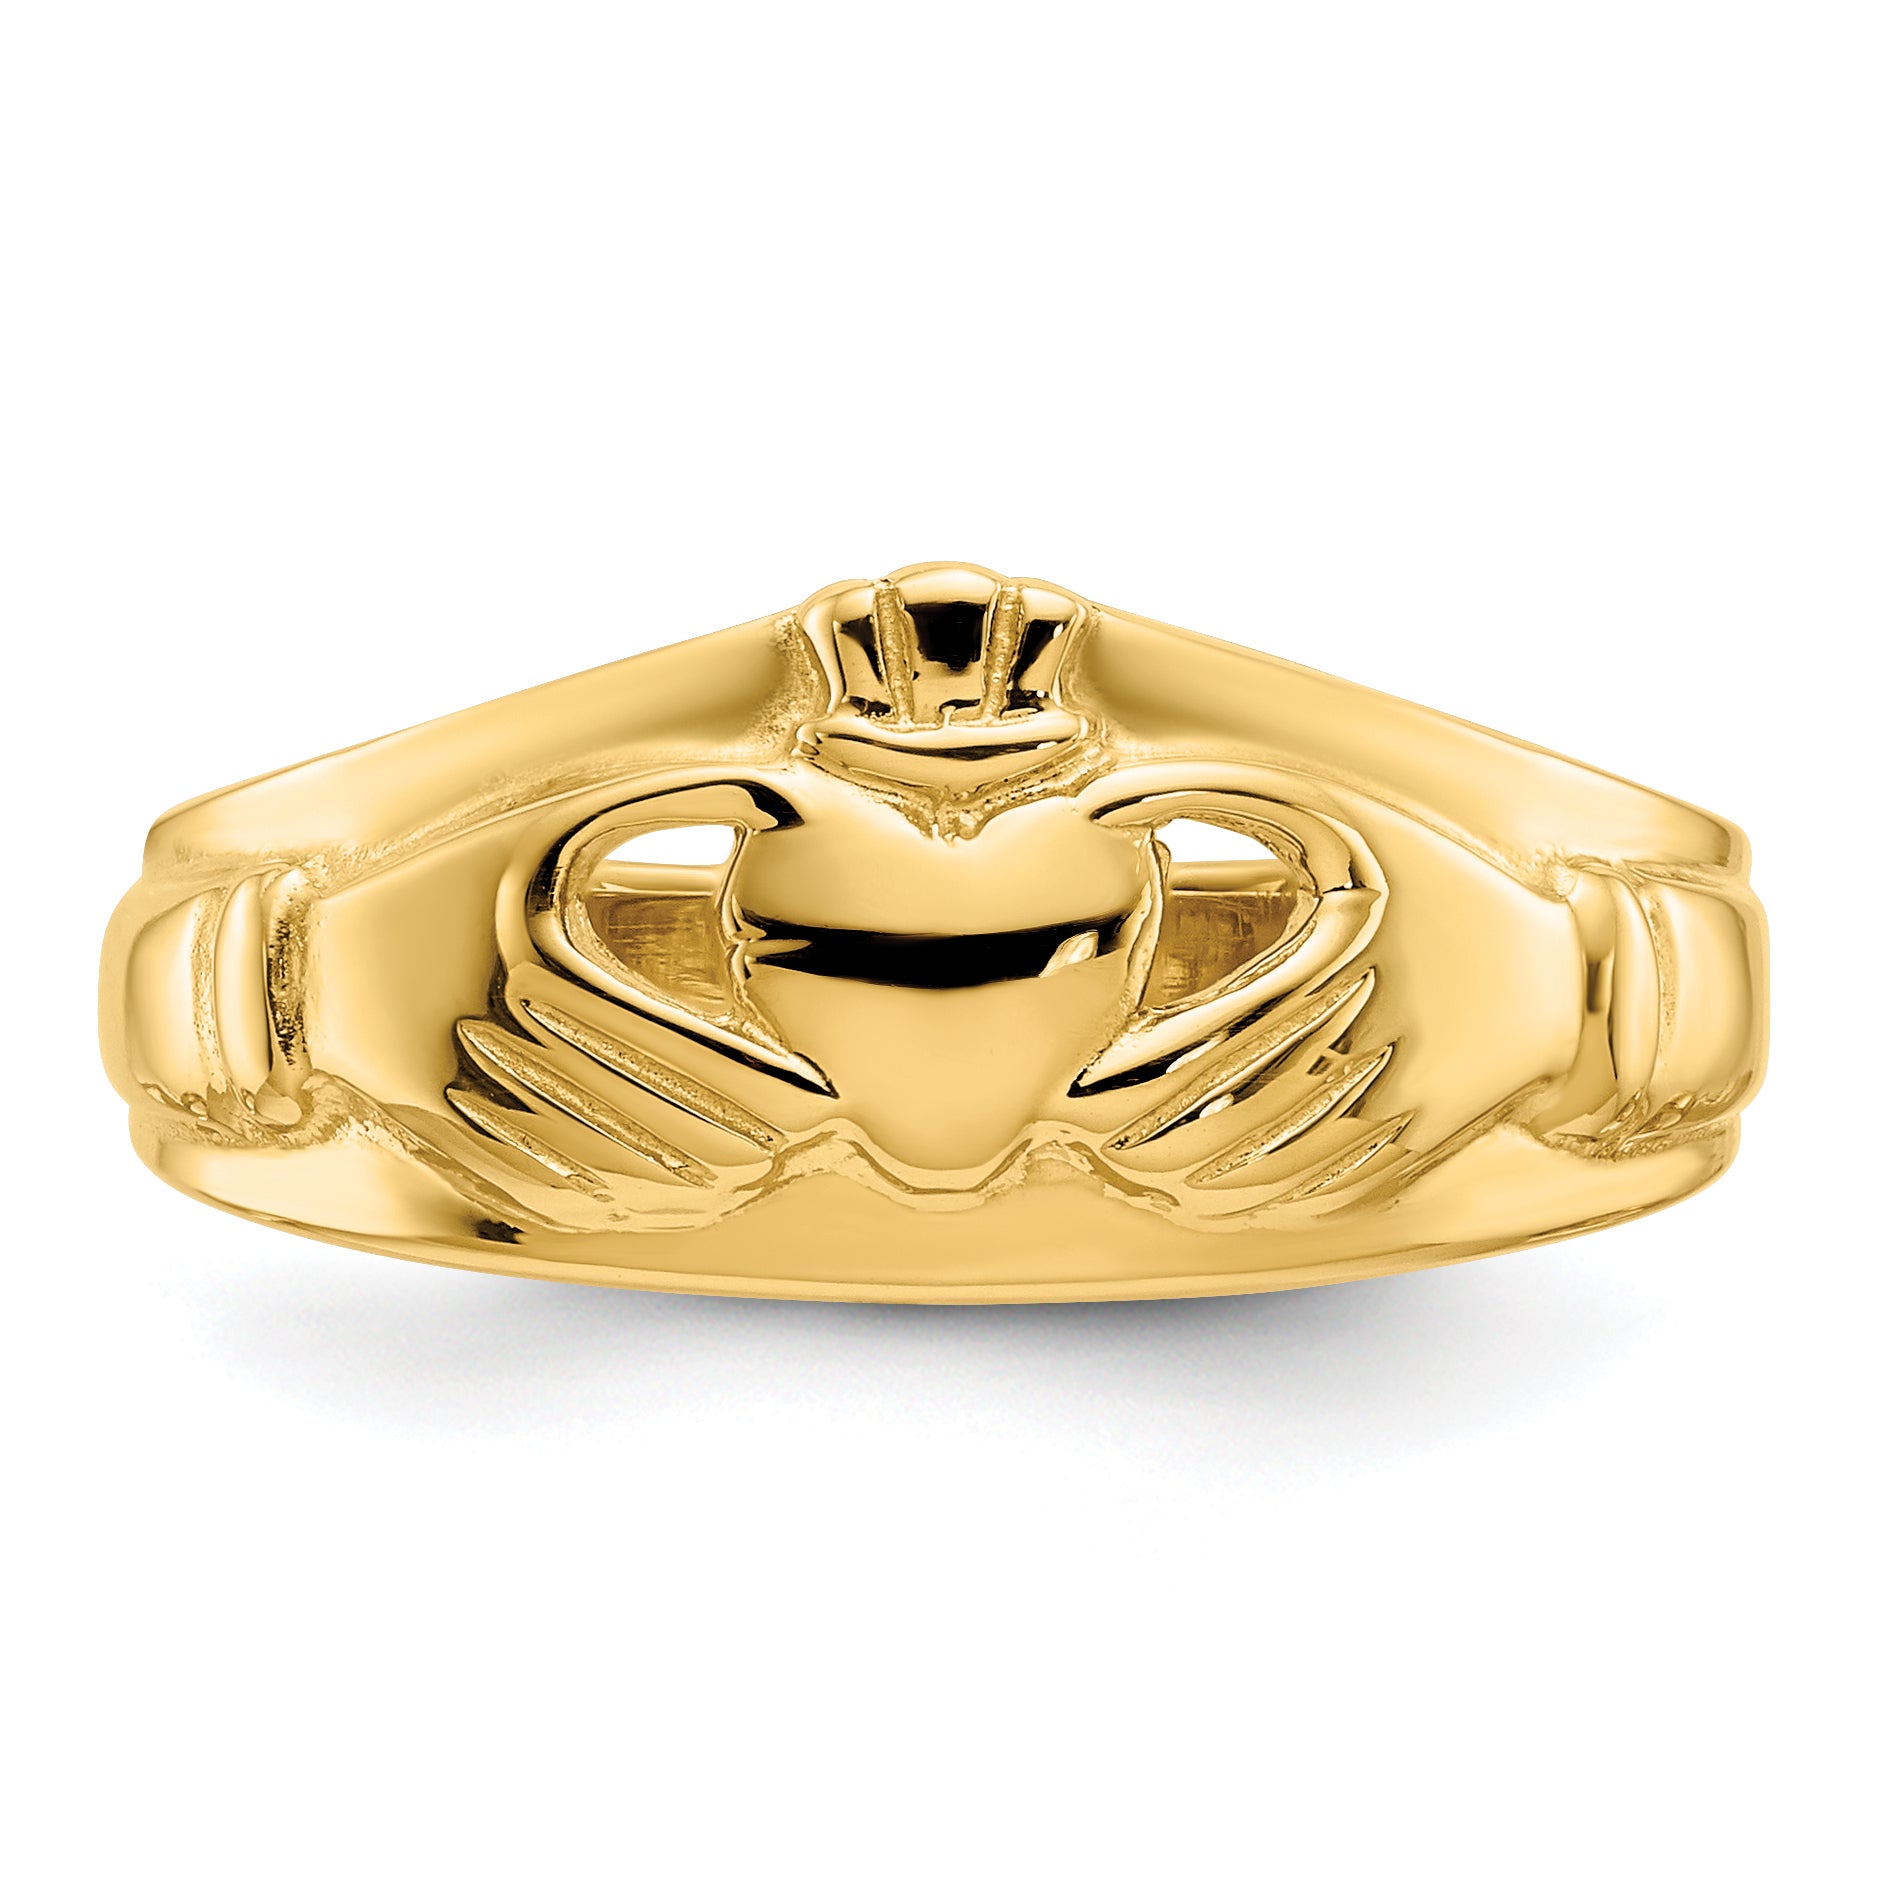 14k Polished Ladies Claddagh Ring